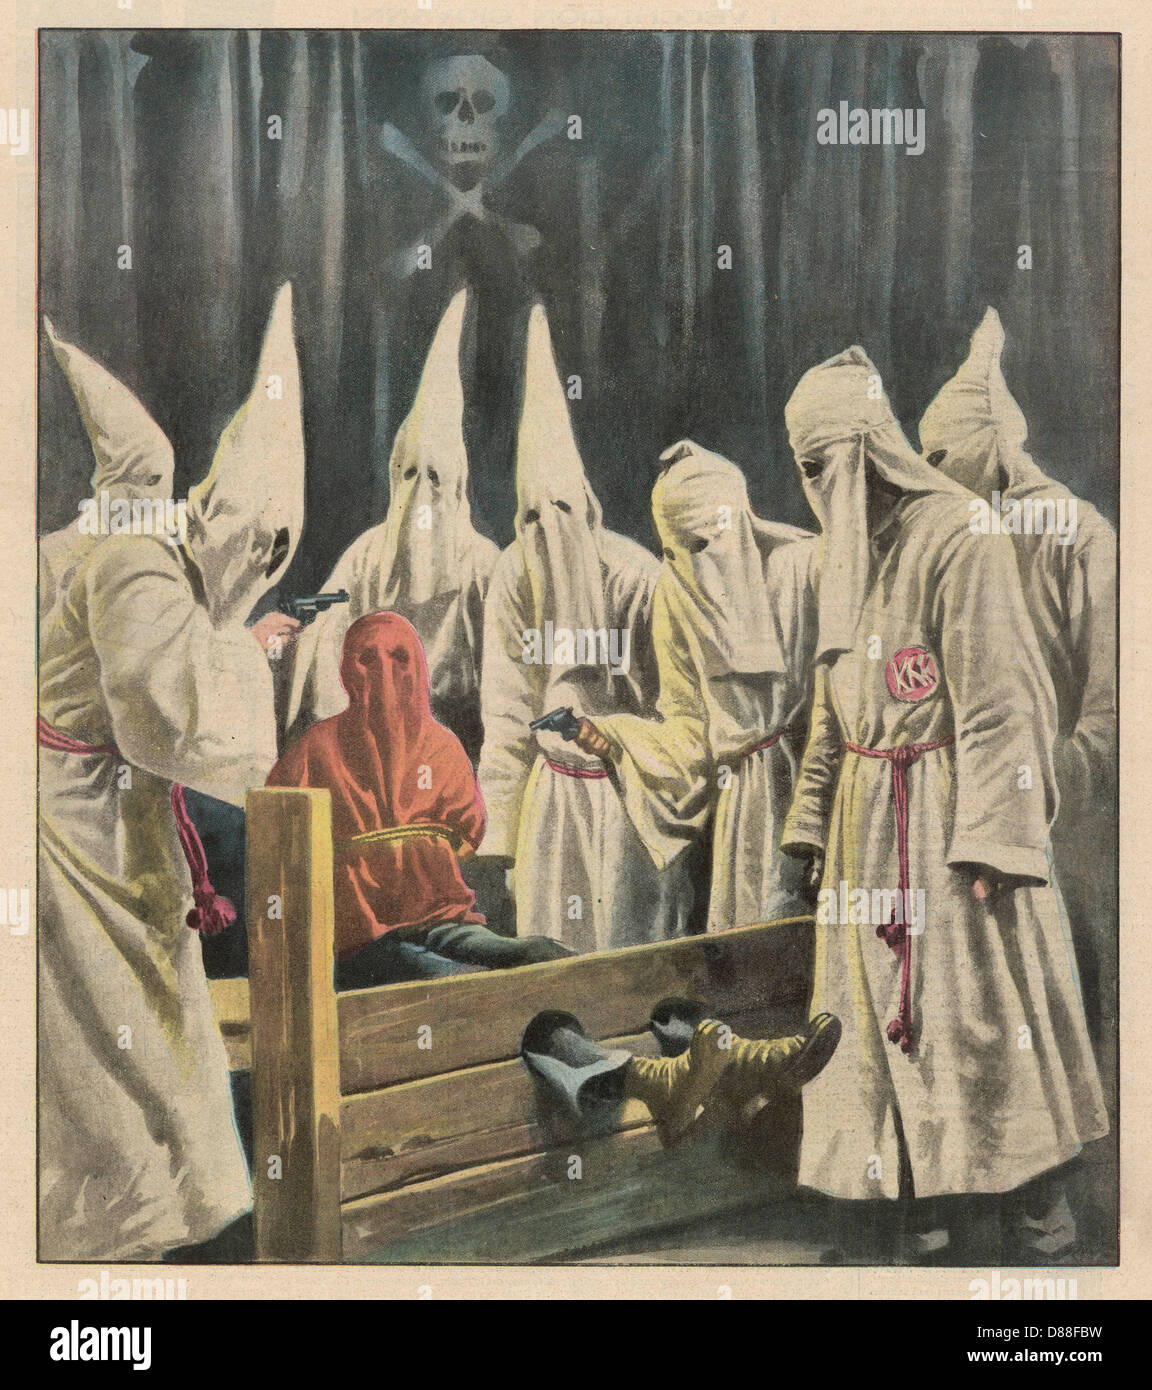 El Ku Klux Klan broma Foto de stock